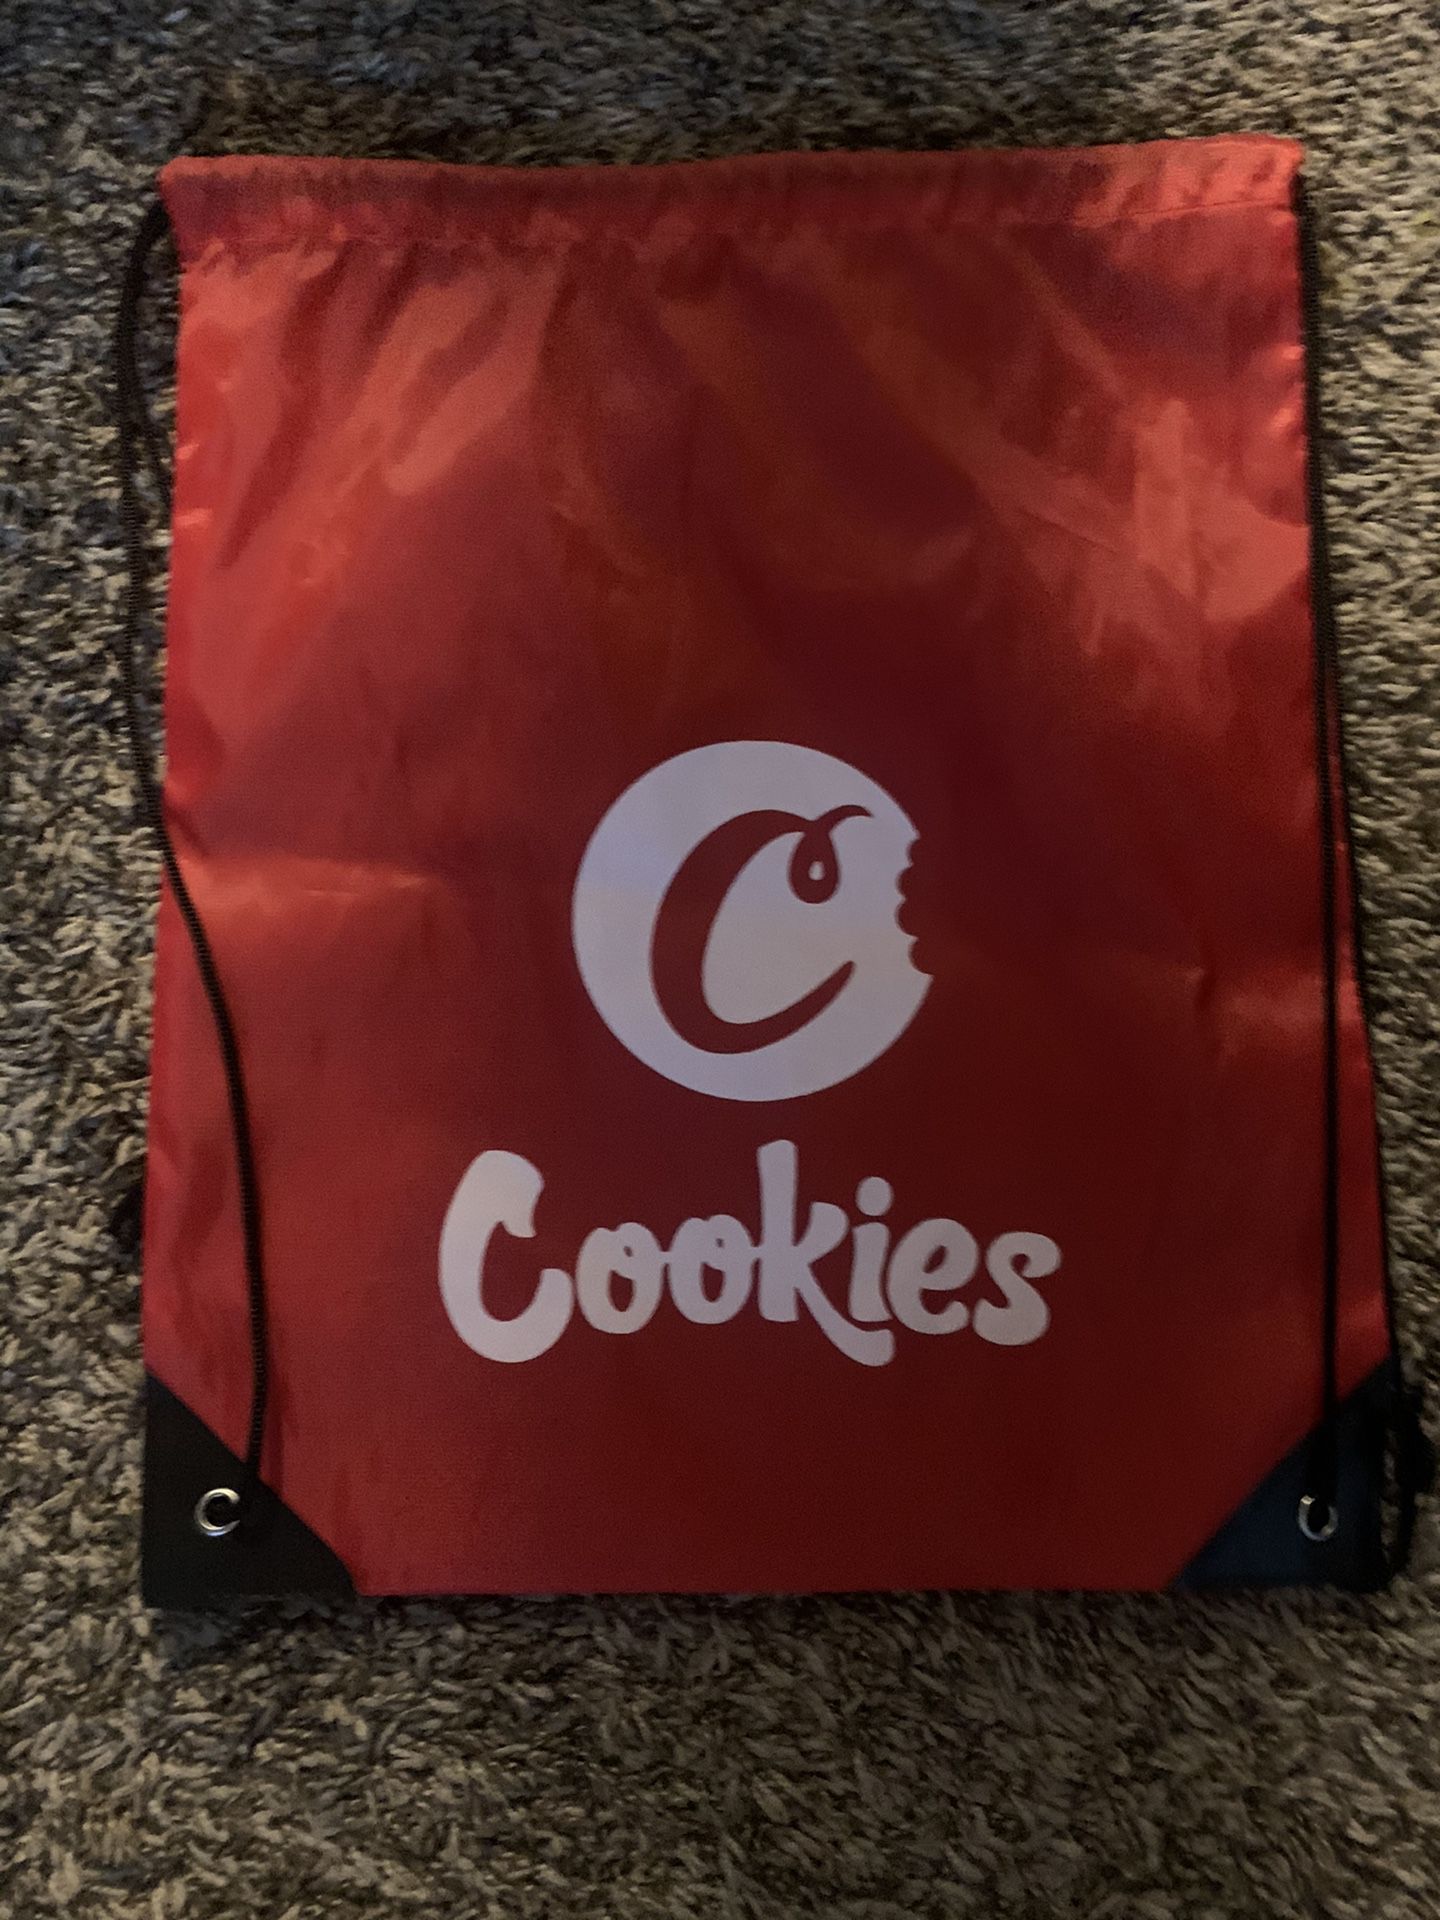 Cookies drawstring bag.